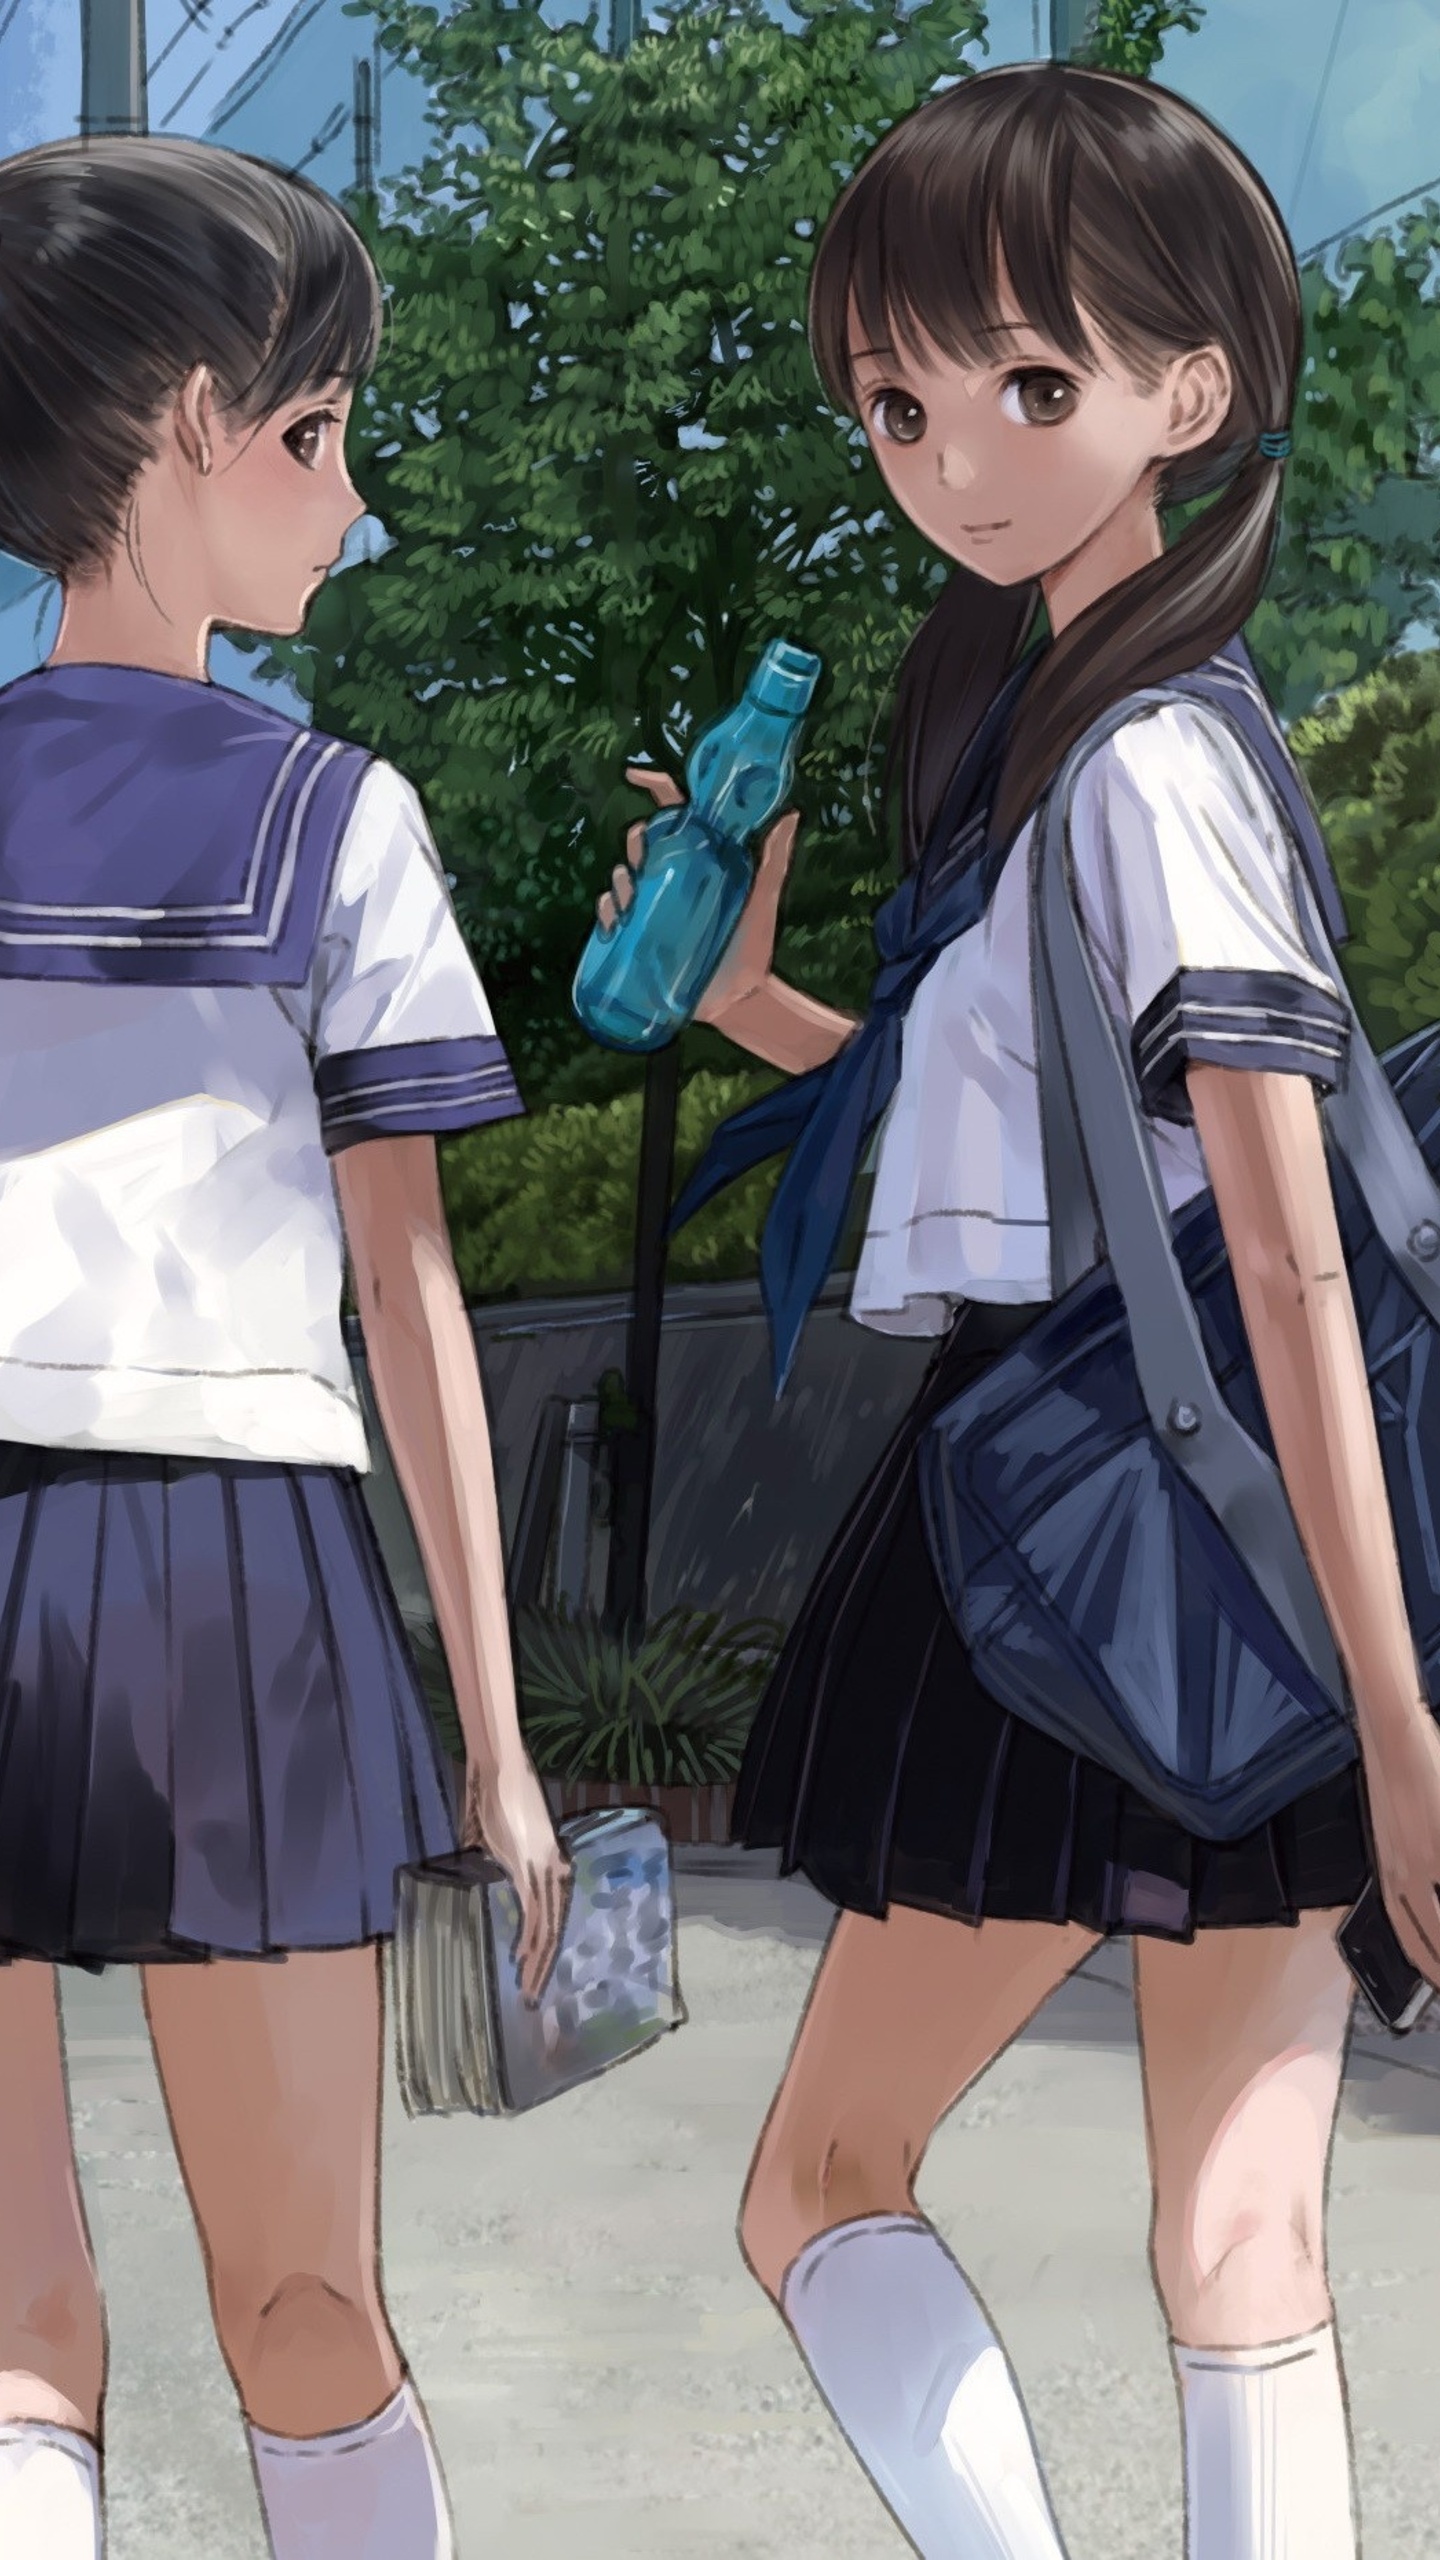 Anime About All Girl School - anime girl